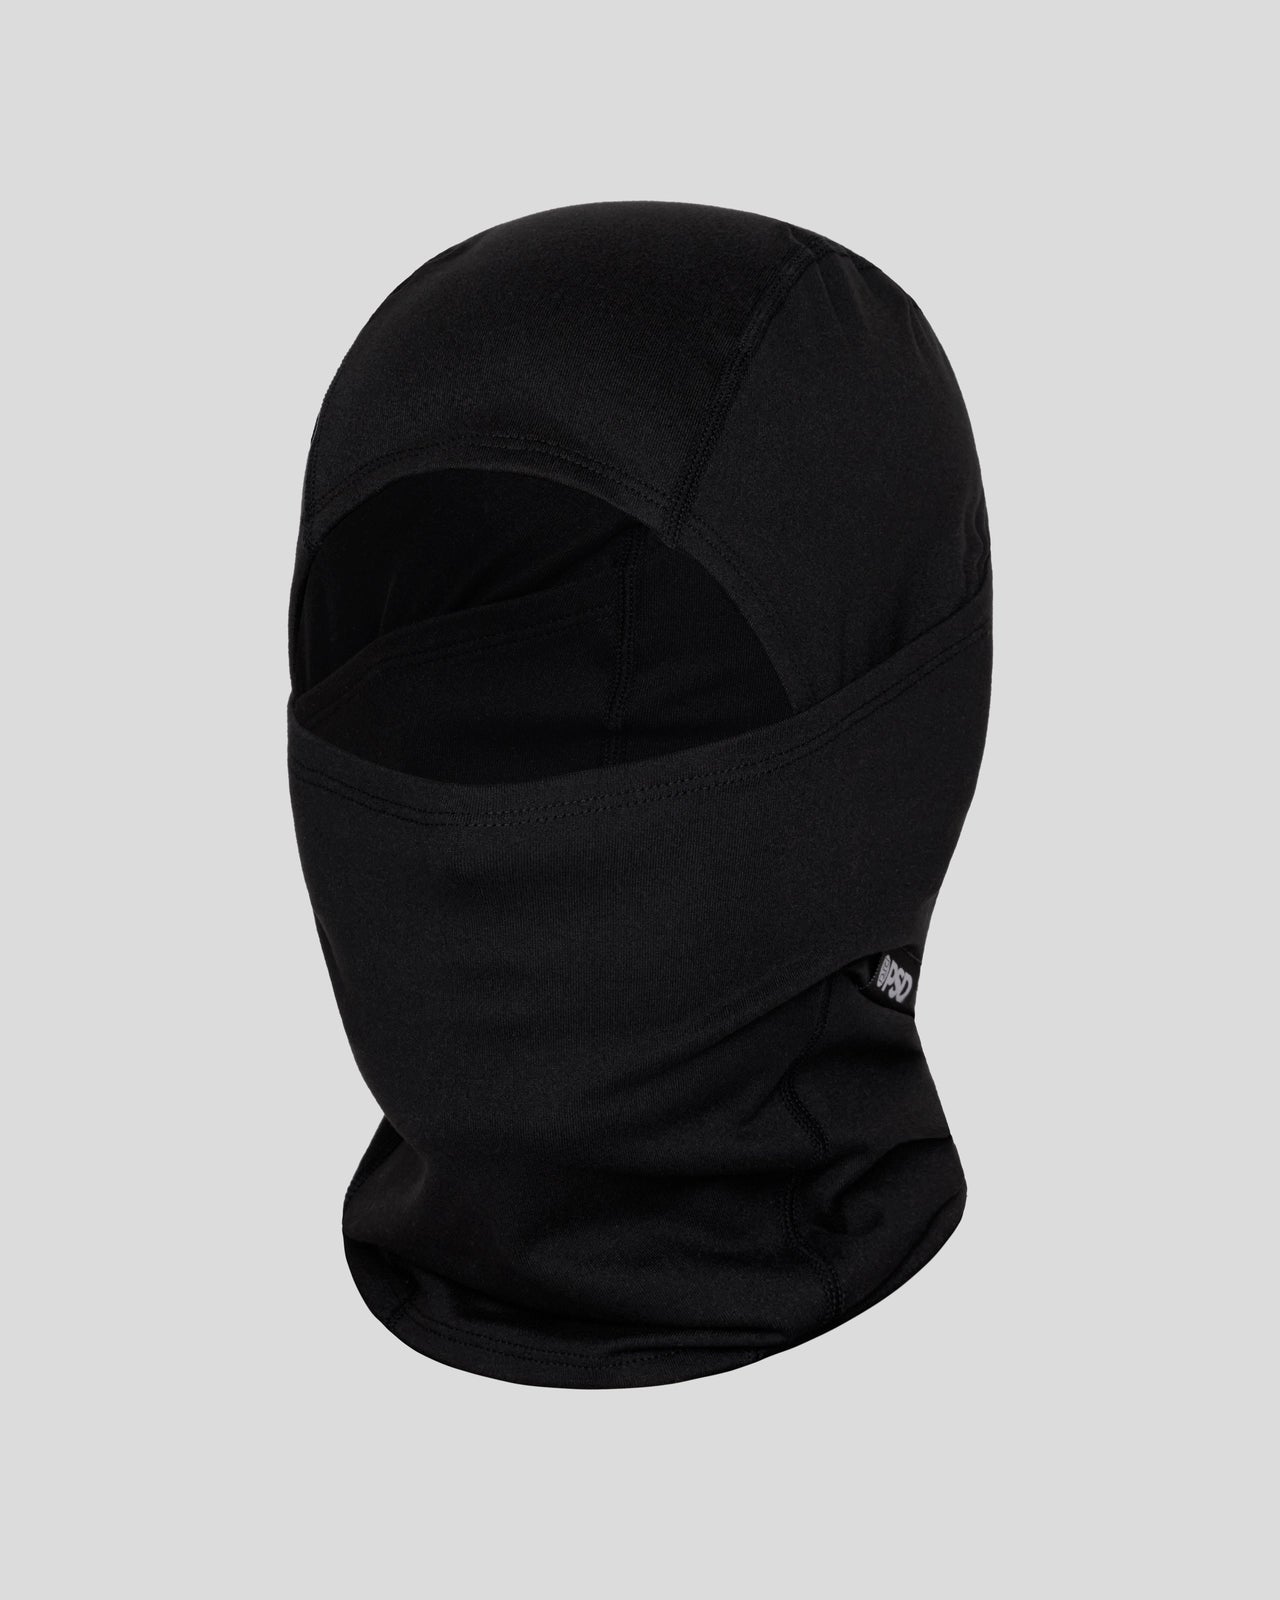 black skinny fighter in streetwear, with vintage mask